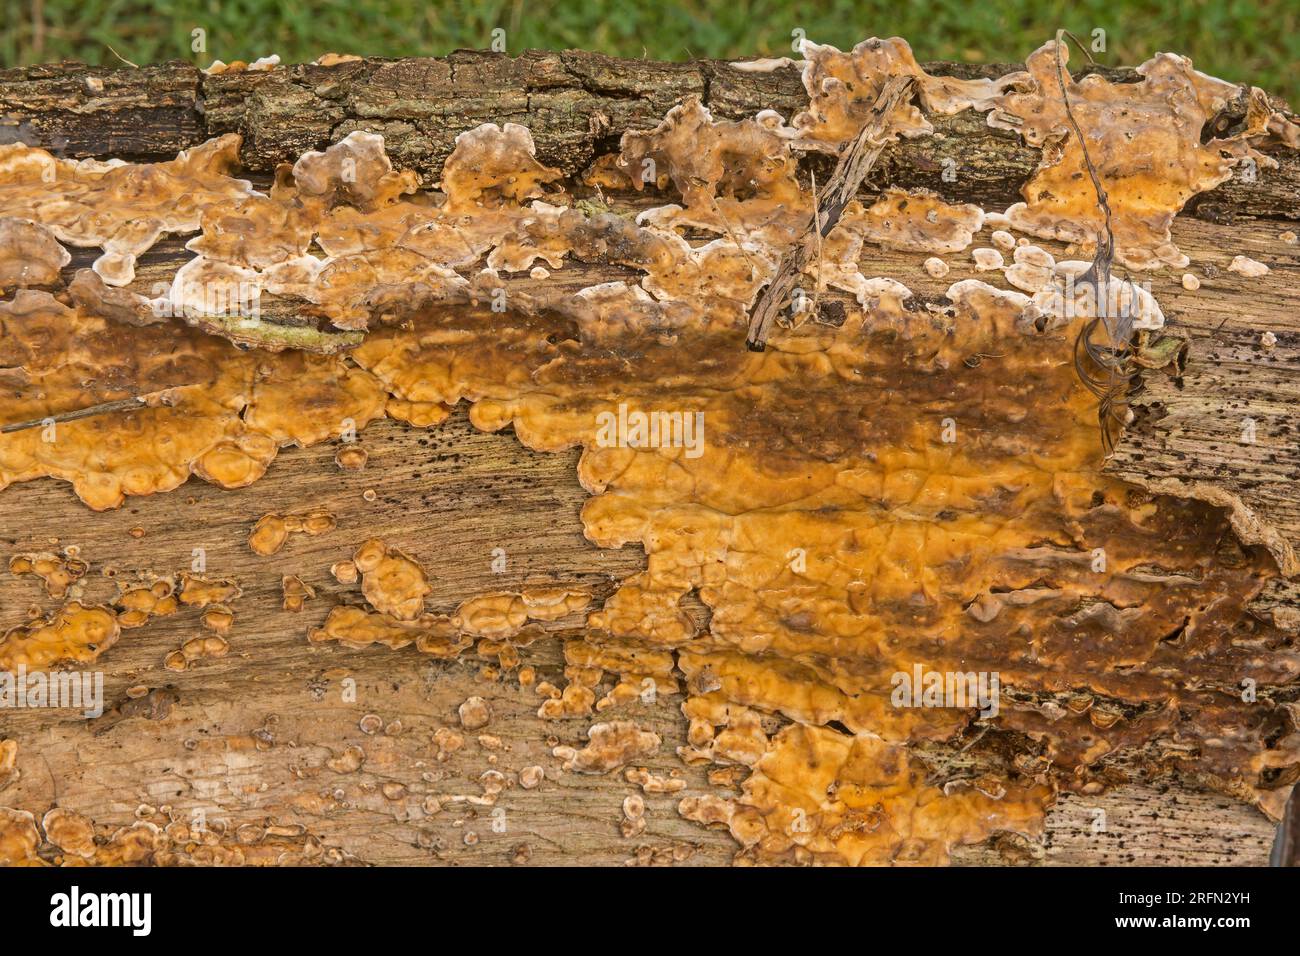 Fungus growth on old rotting wood Fungus growth on old rotting wood Stock Photo